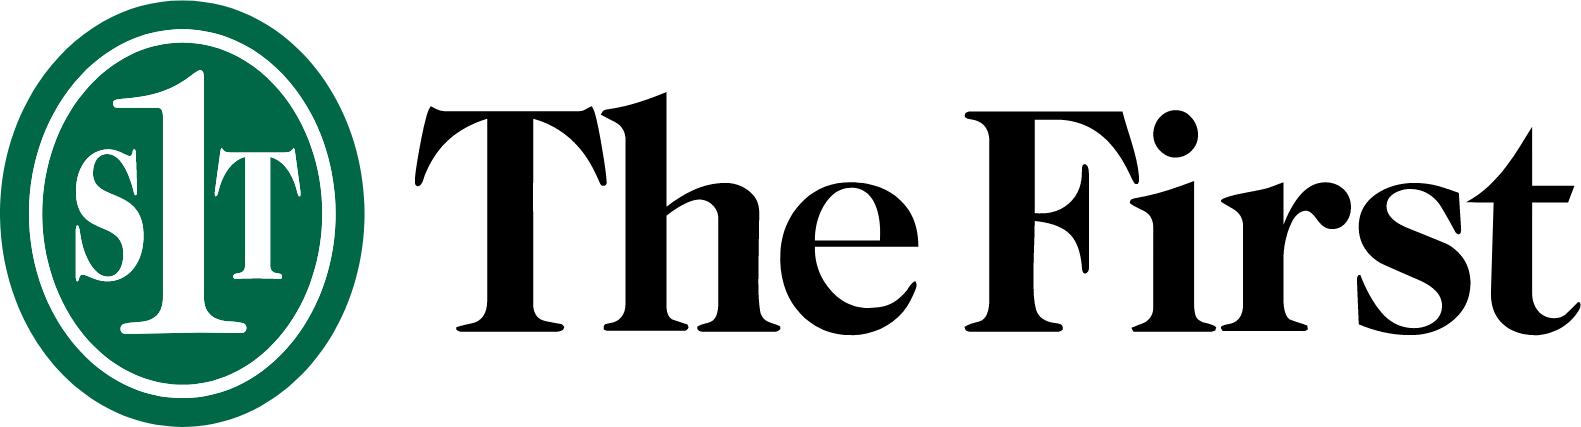 The First Bancshares logo large (transparent PNG)